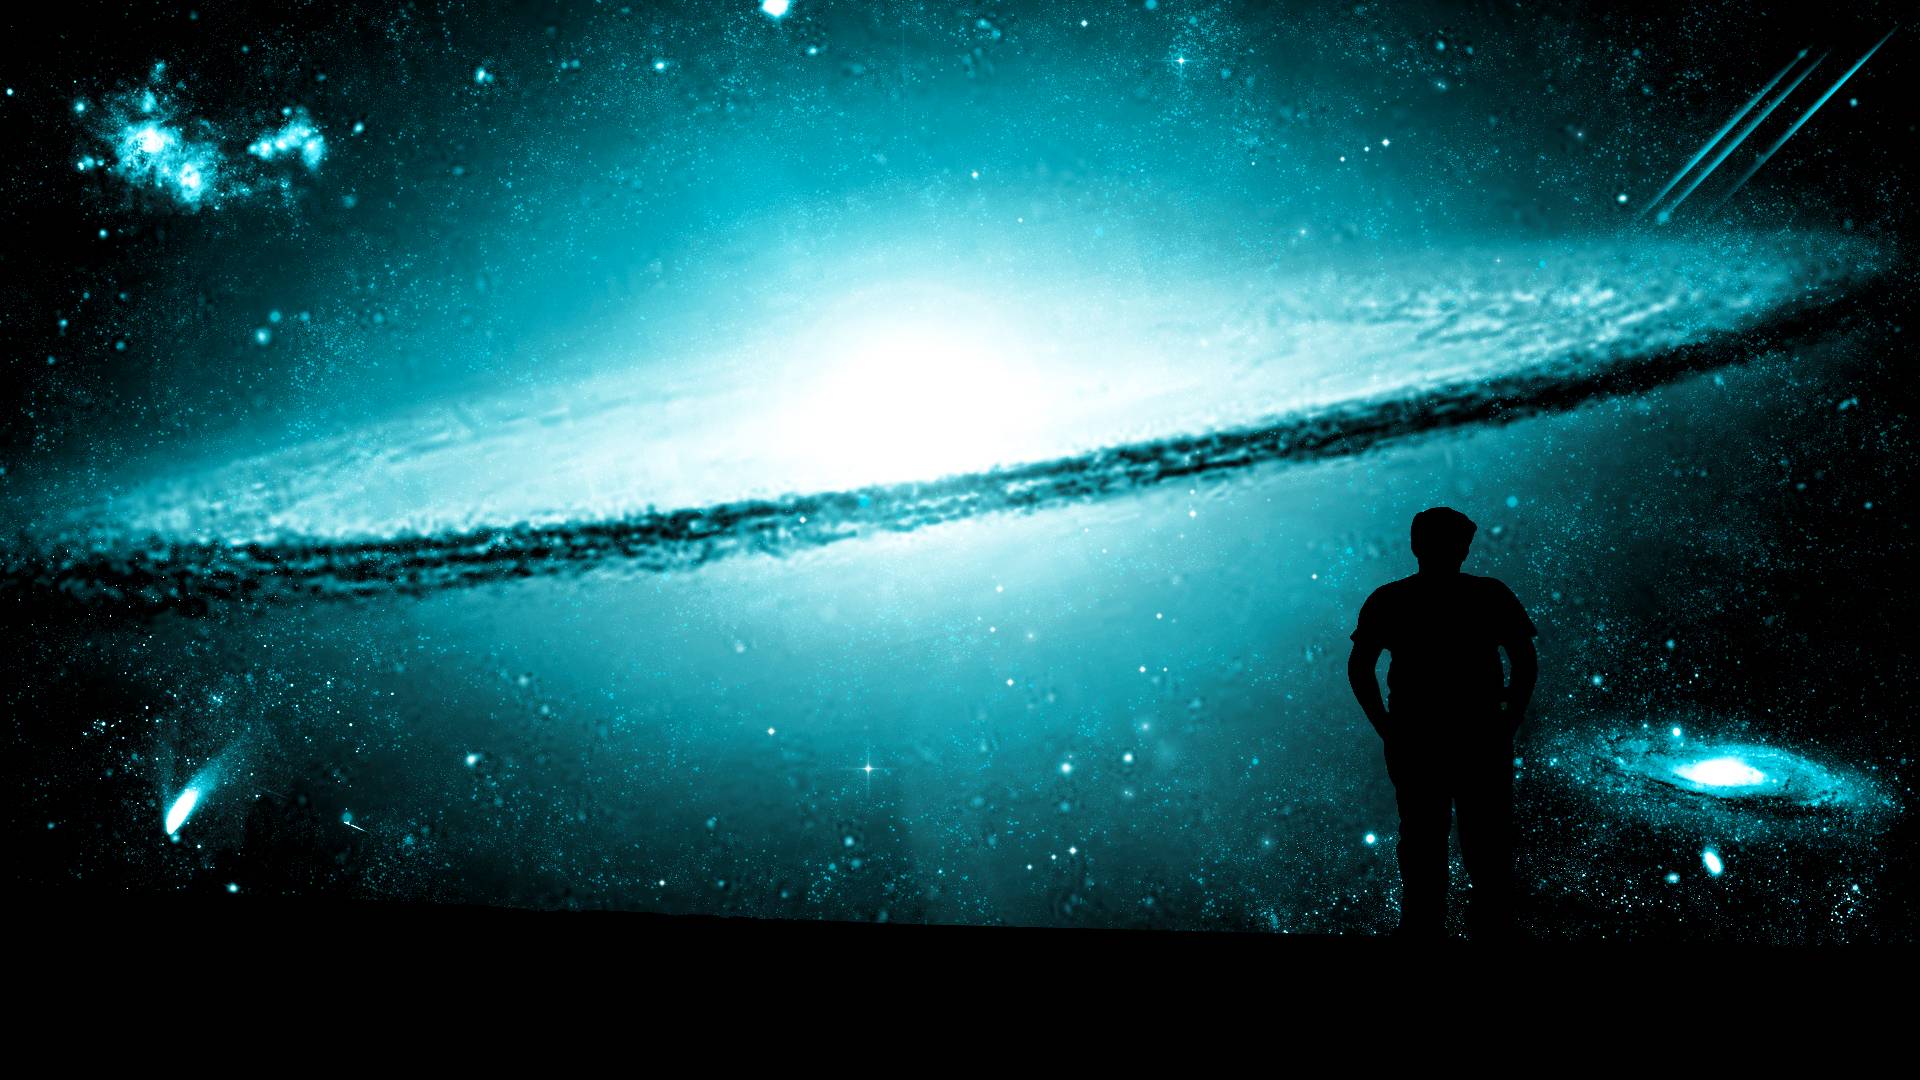 HD Stargate Space Universe Wallpaper Of Digital Digital Universe